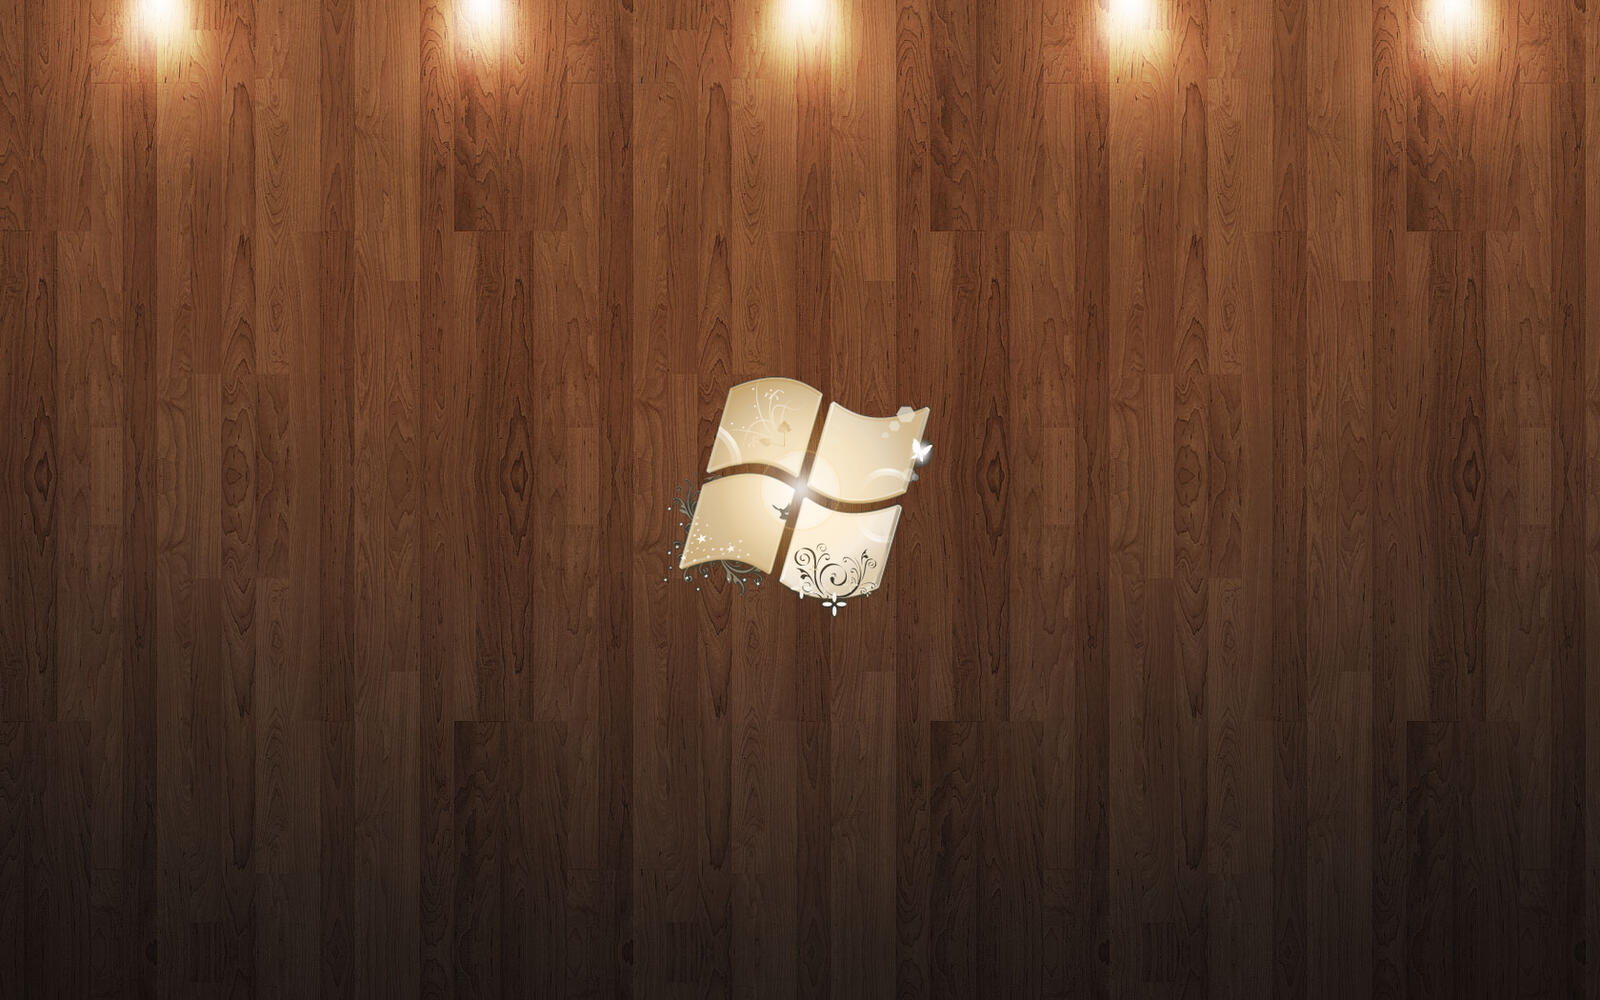 Wallpapers emblem microsoft pattern on the desktop